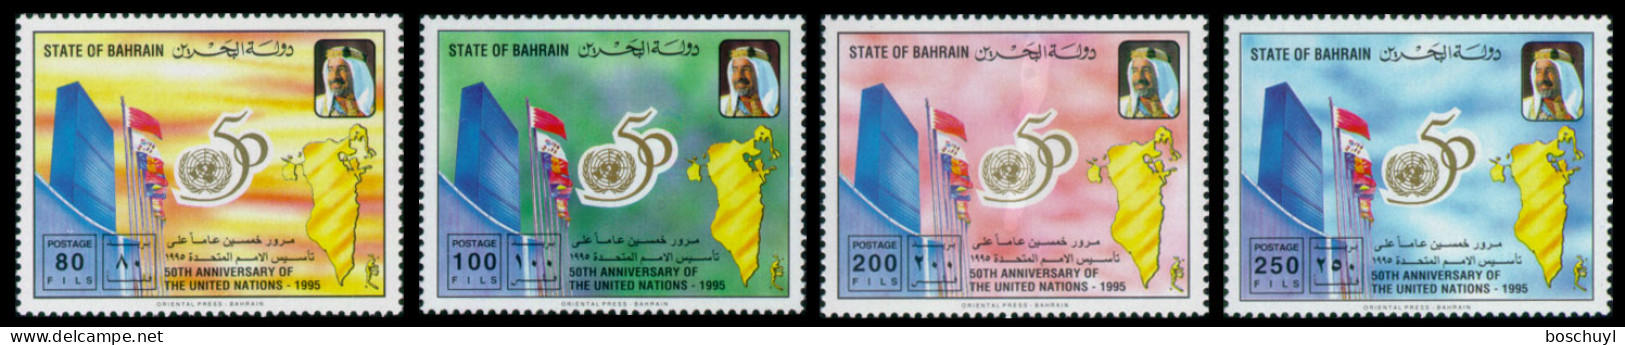 Bahrain, 1995, United Nations 50th Anniversary, MNH, Michel 580-583 - Bahrain (1965-...)